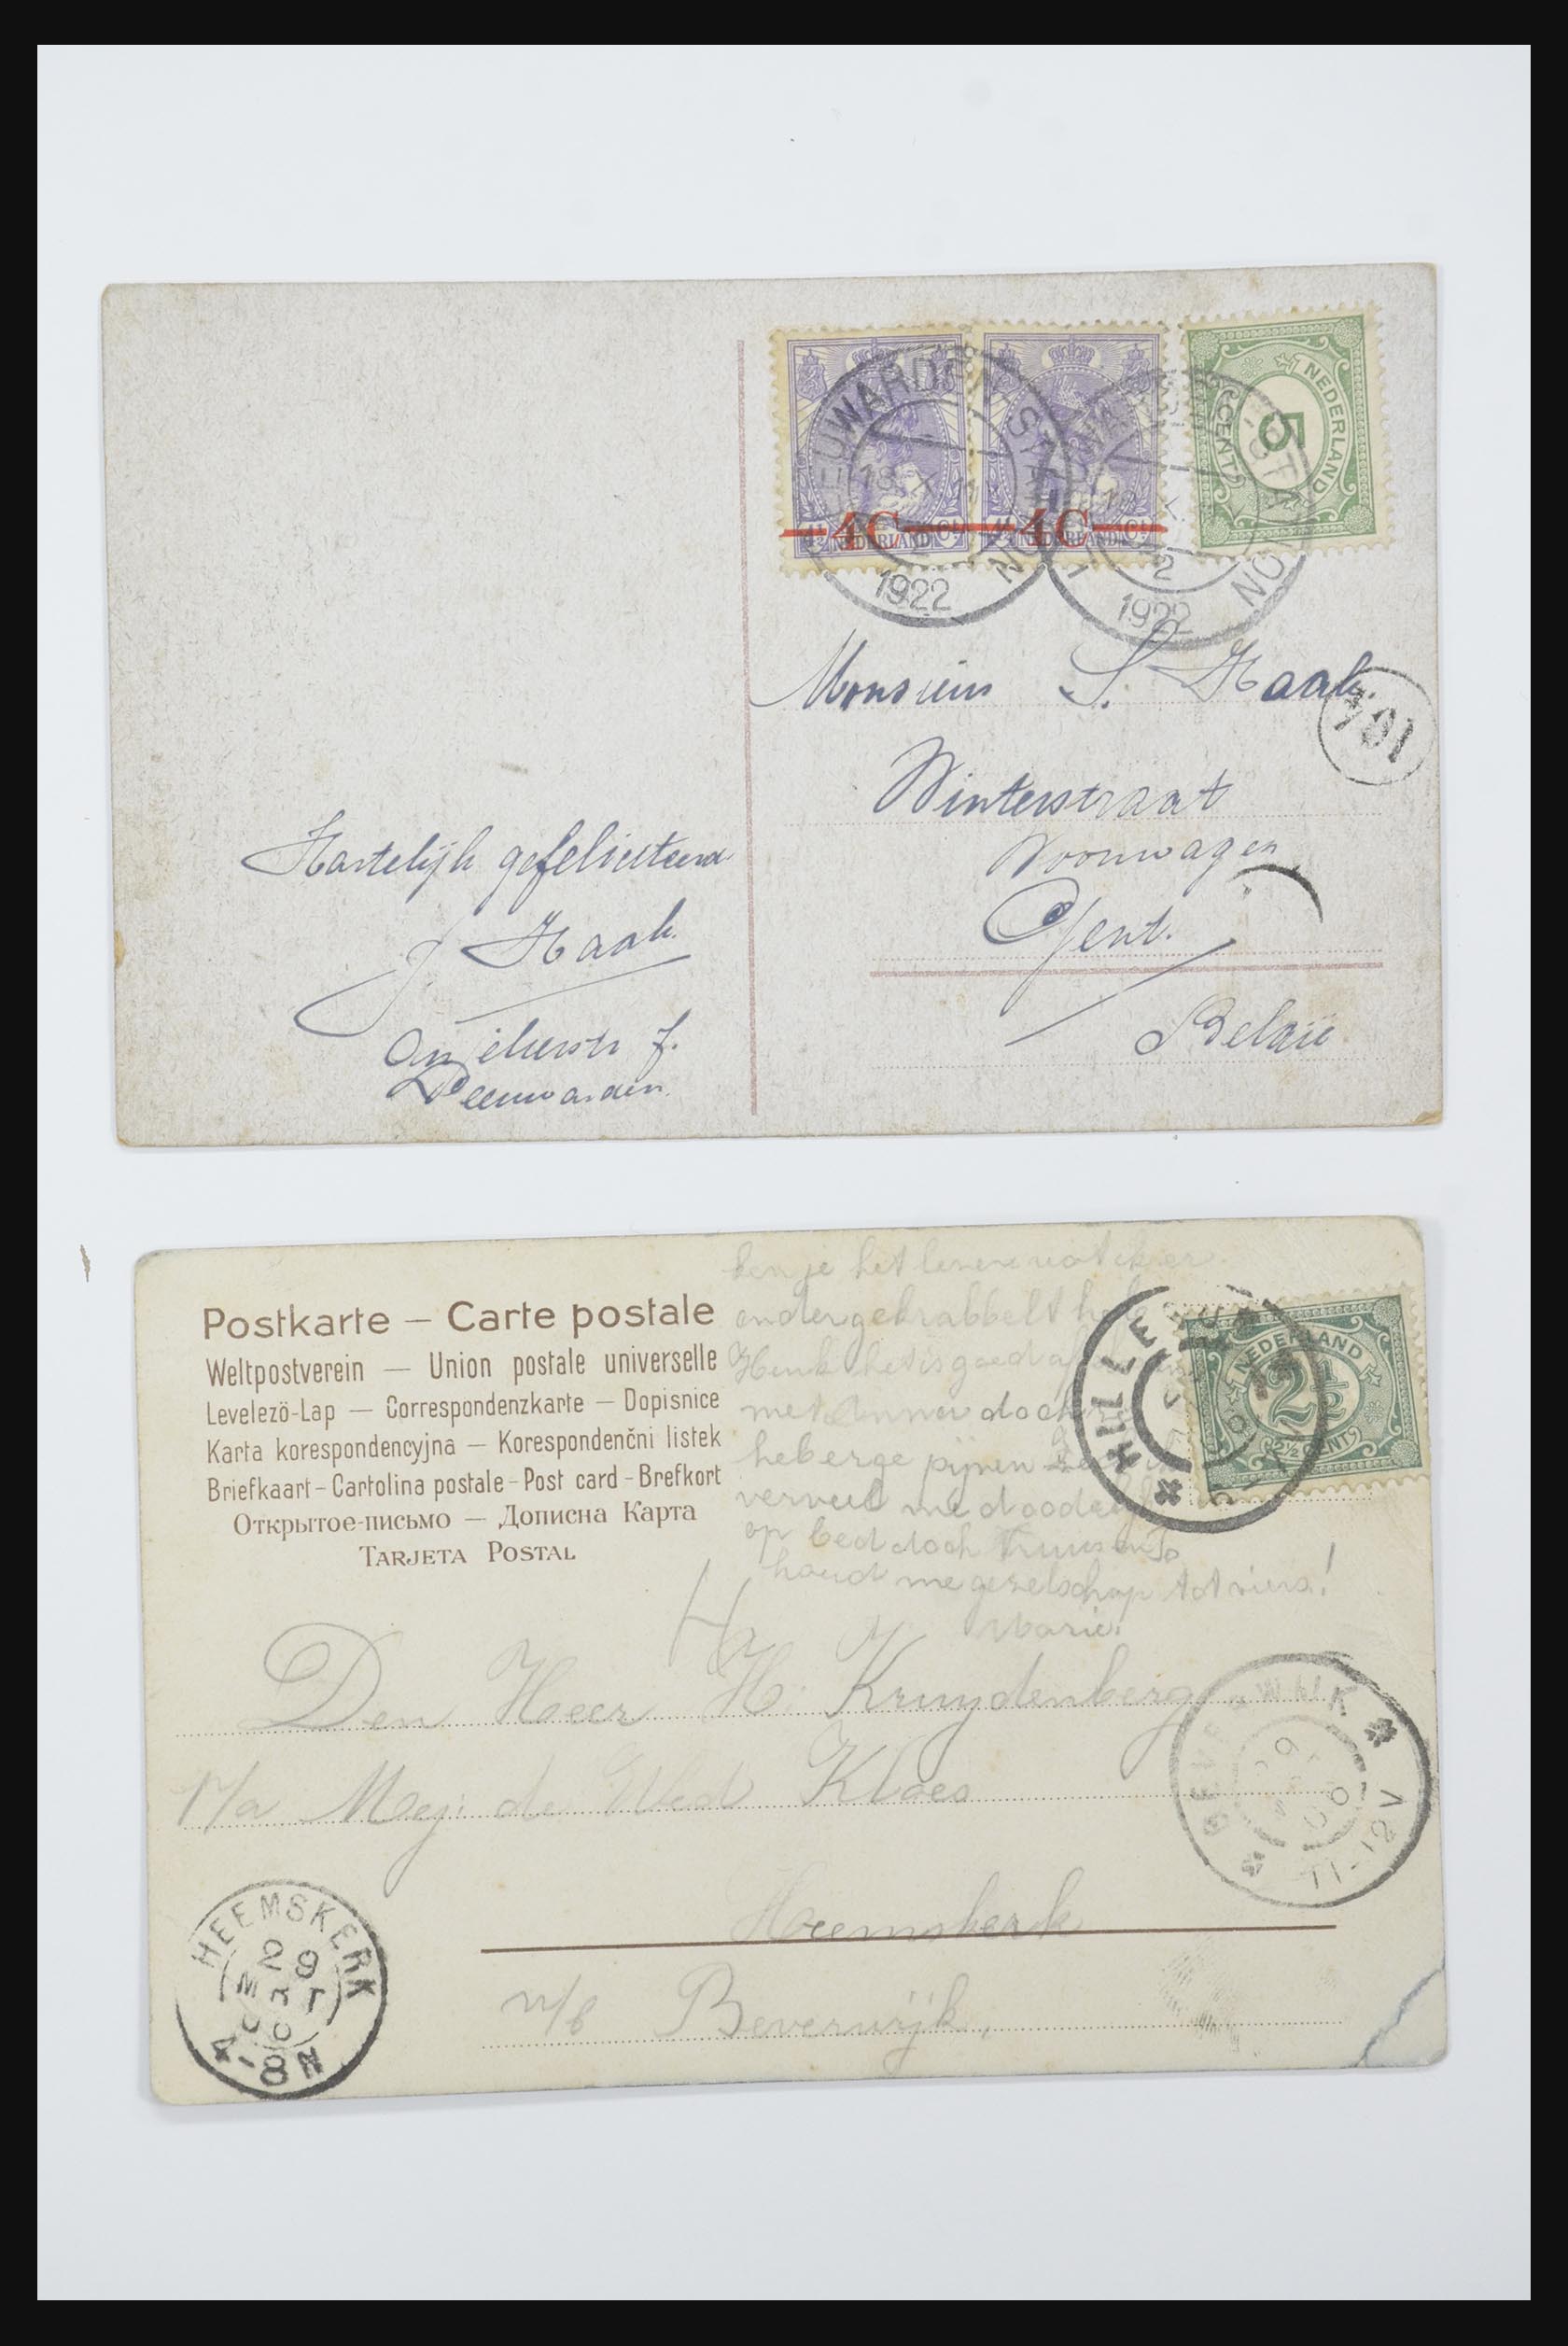 31668 051 - 31668 Netherlands picture postcards 1905-1935.